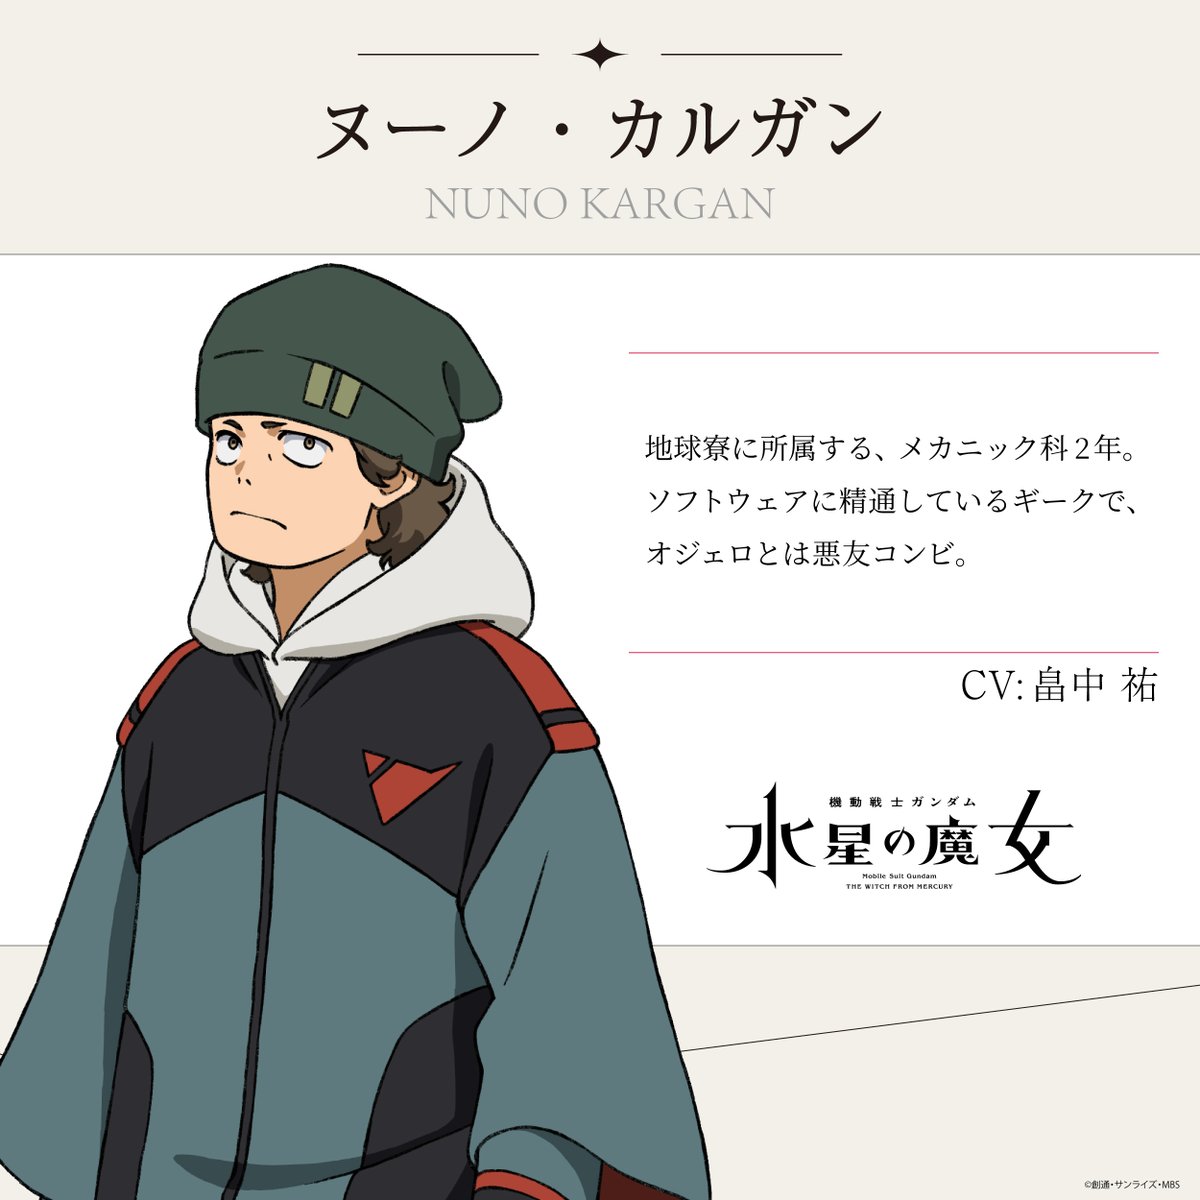 Tasuku Hatanaka as Nuno Kargan in Mobile Suit Gundam: The Witch from Mercury